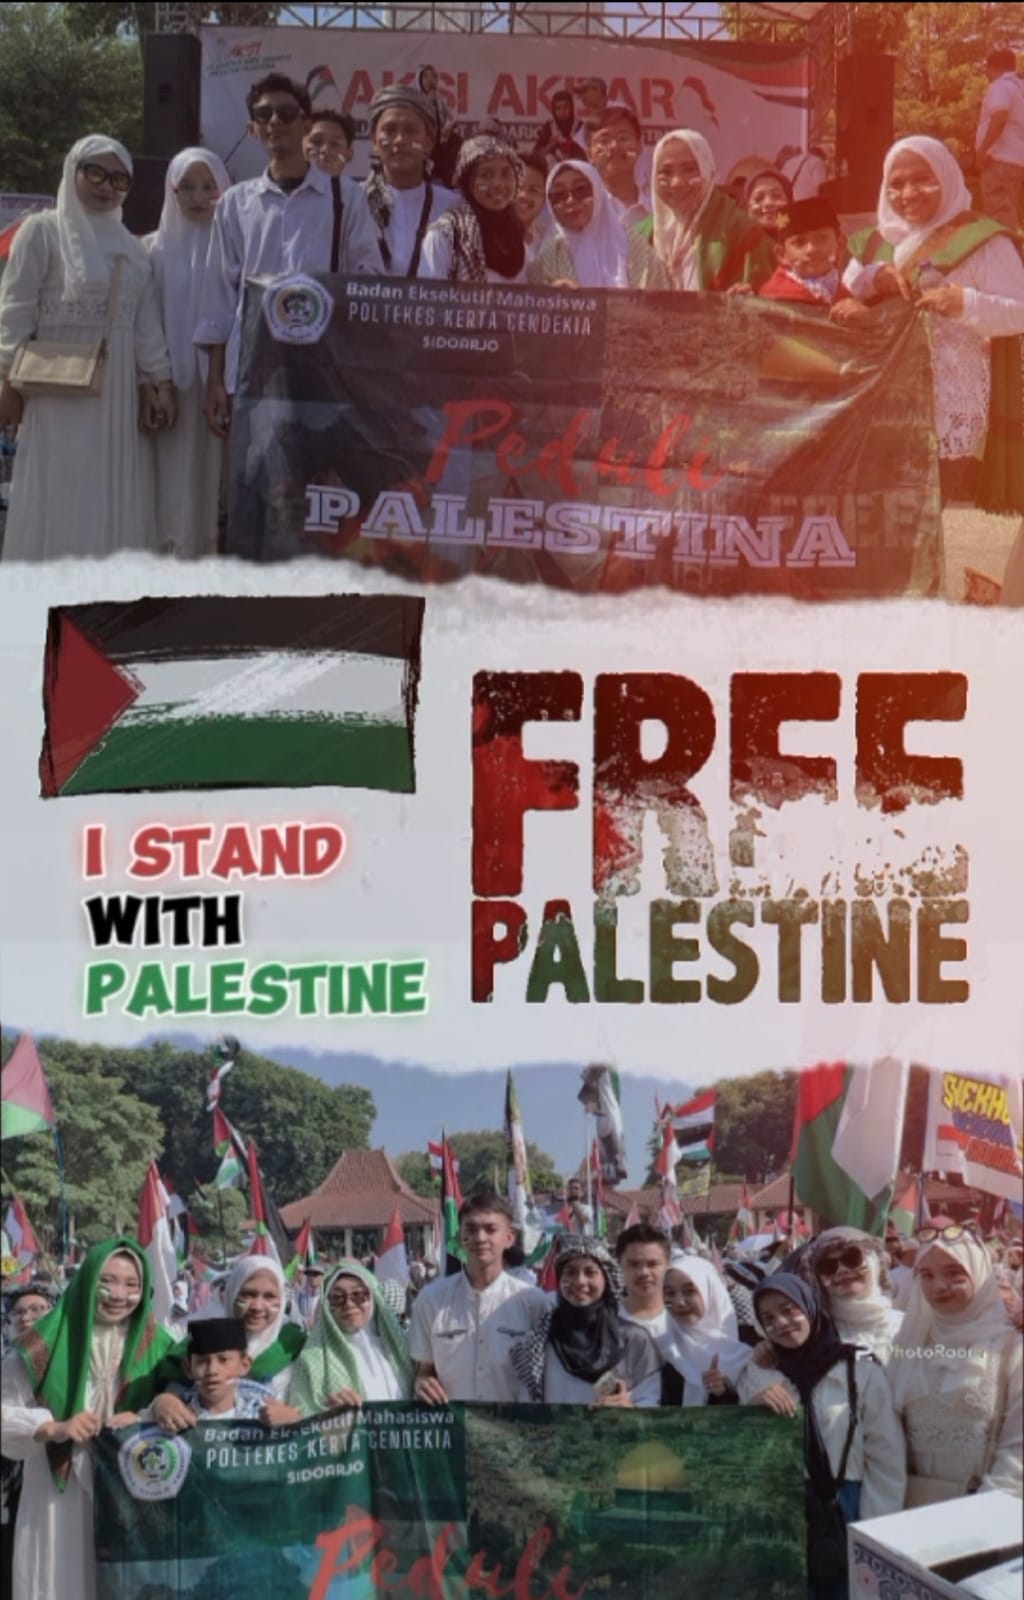 Peduli_Palestina1.jpg